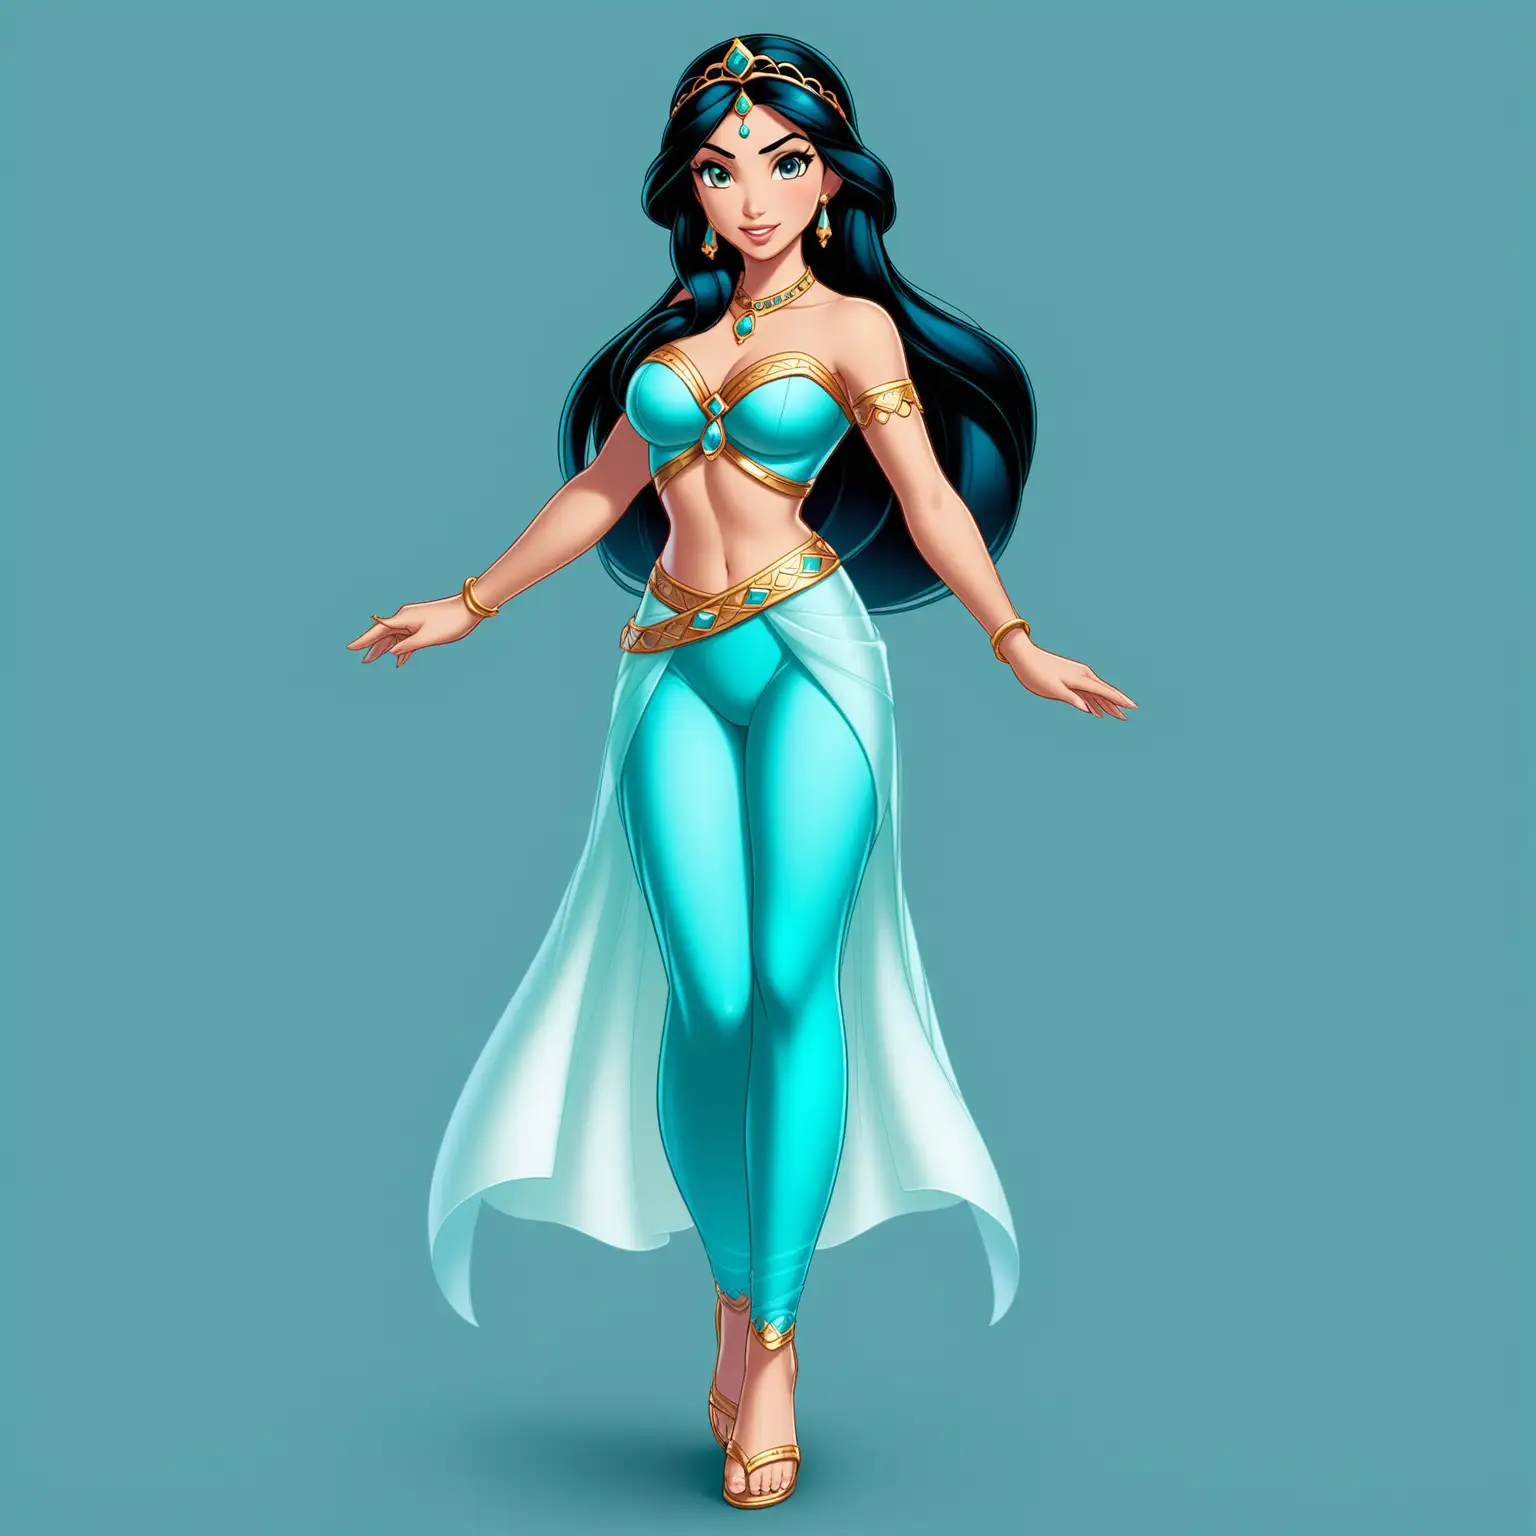 Enchanted Evening with Disney Princess Jasmine in Full Royal Regalia